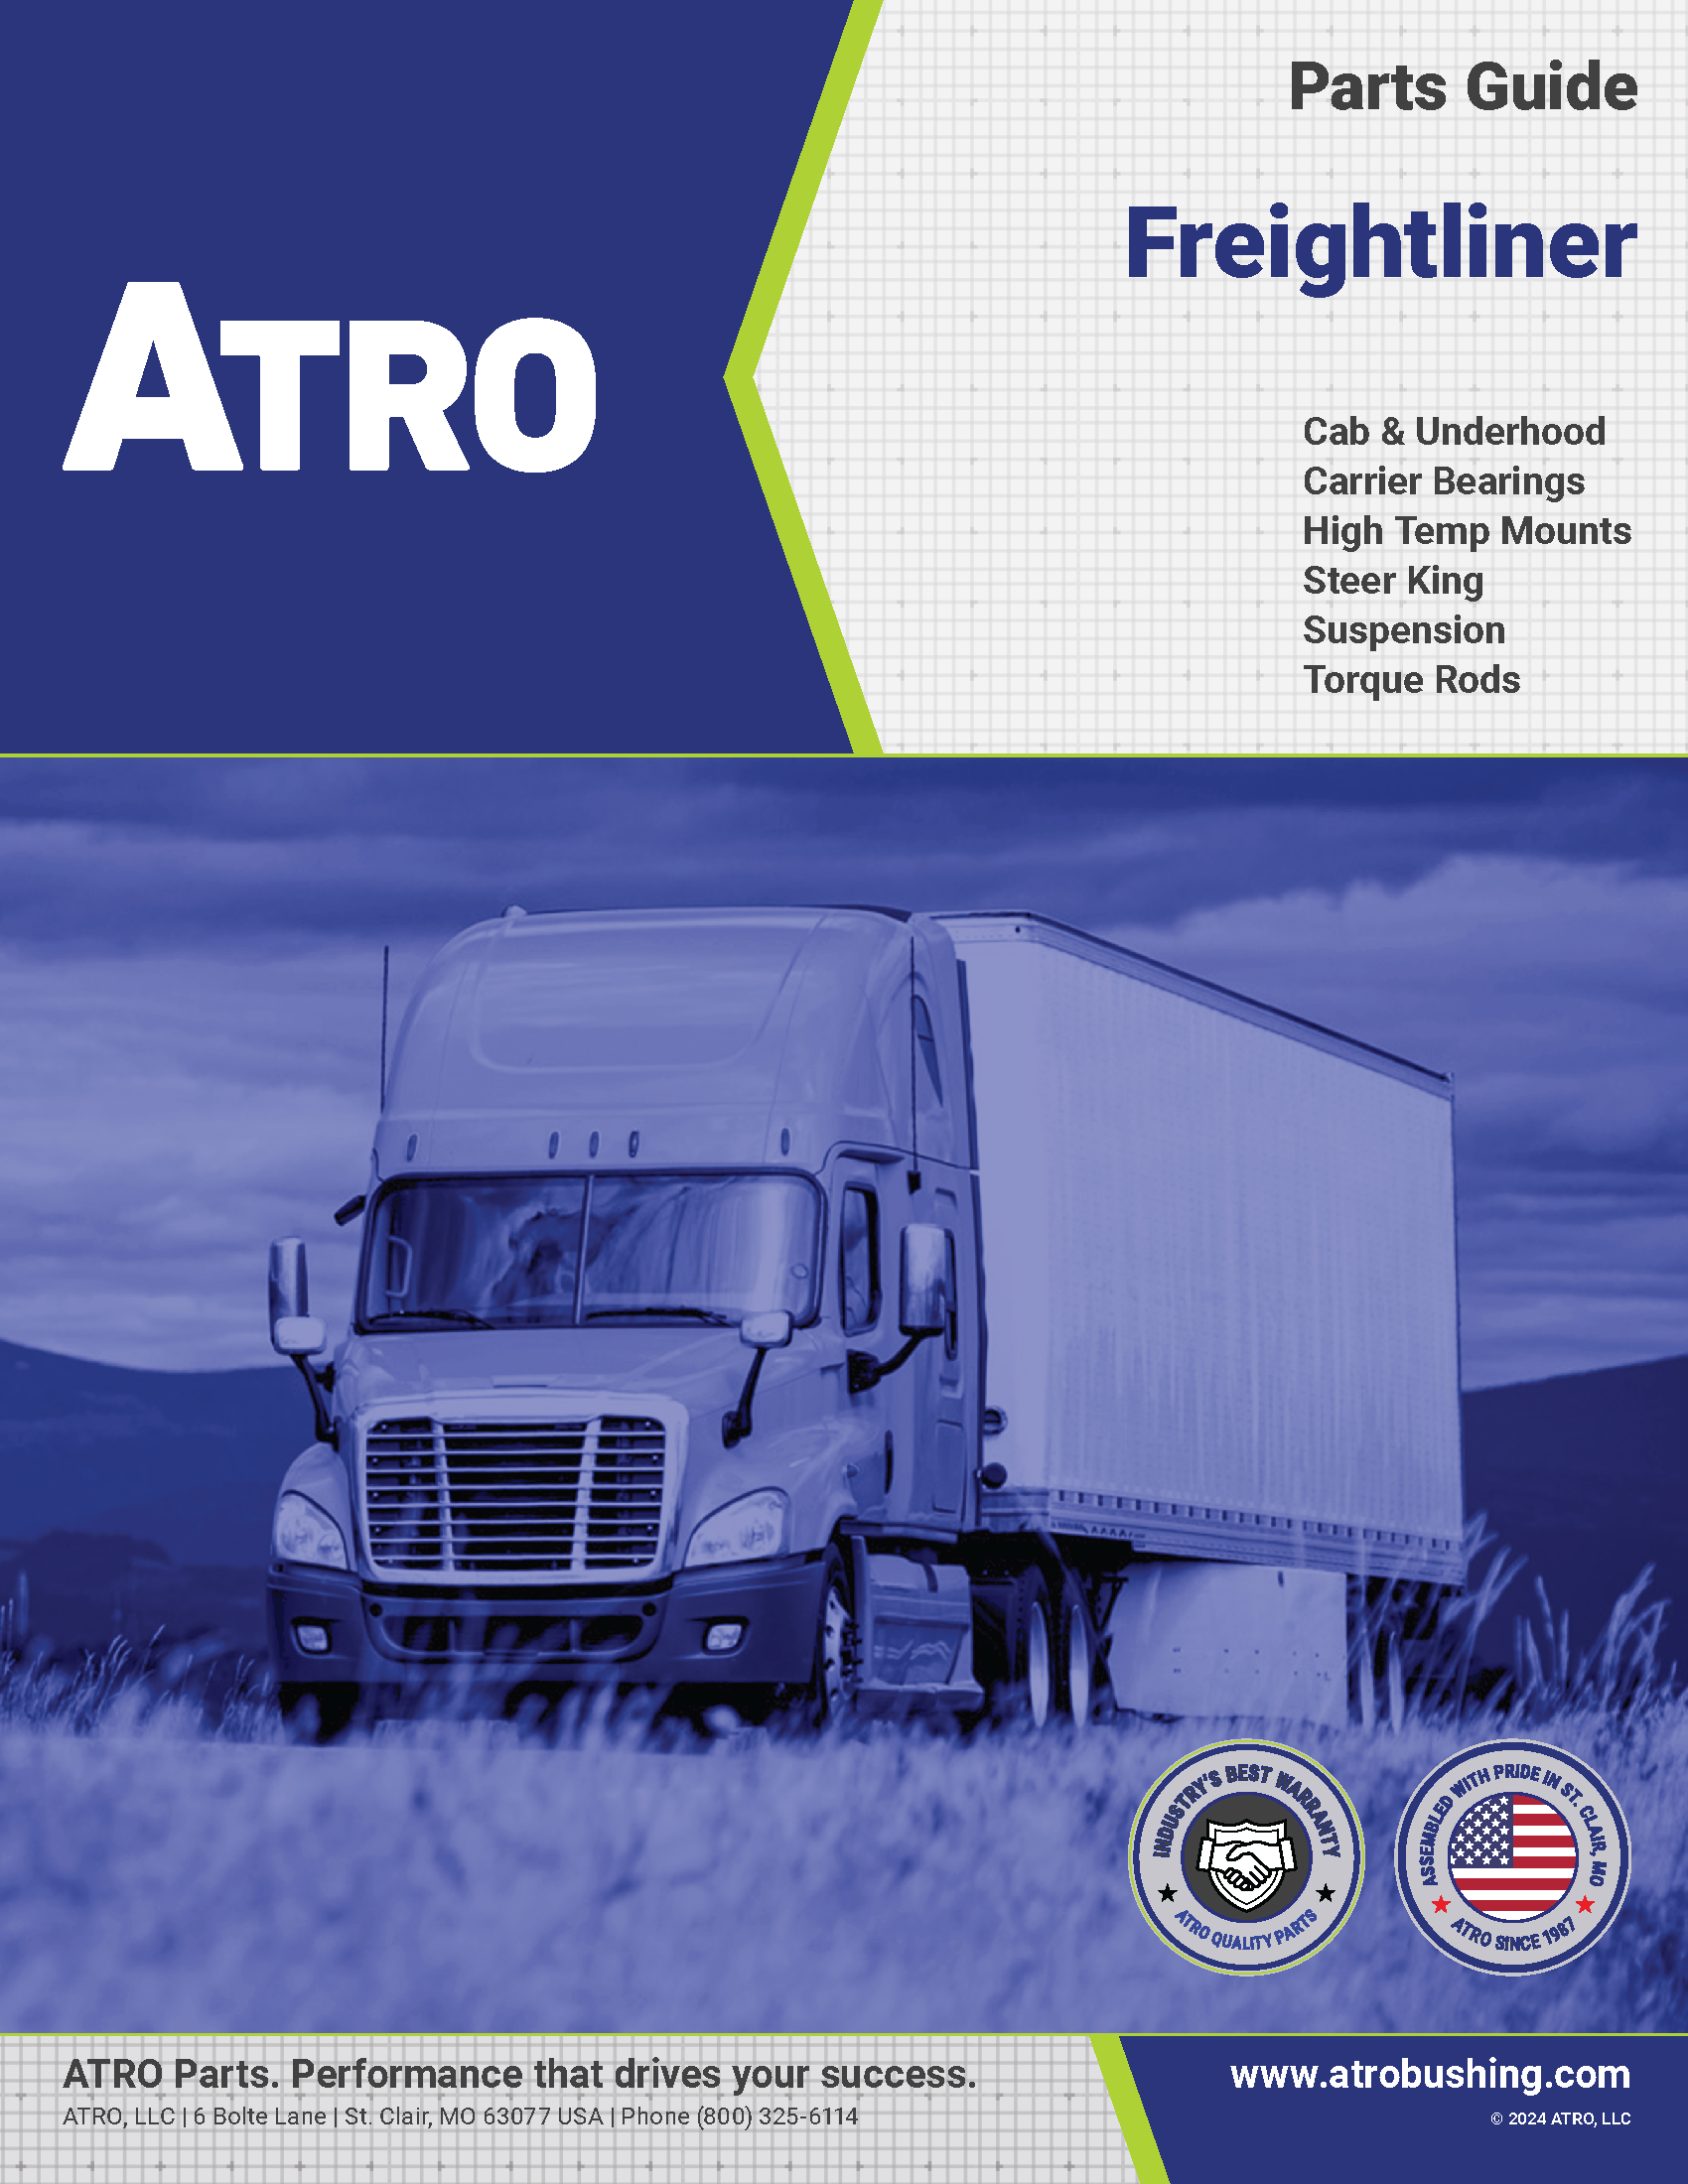 Freightliner Guide